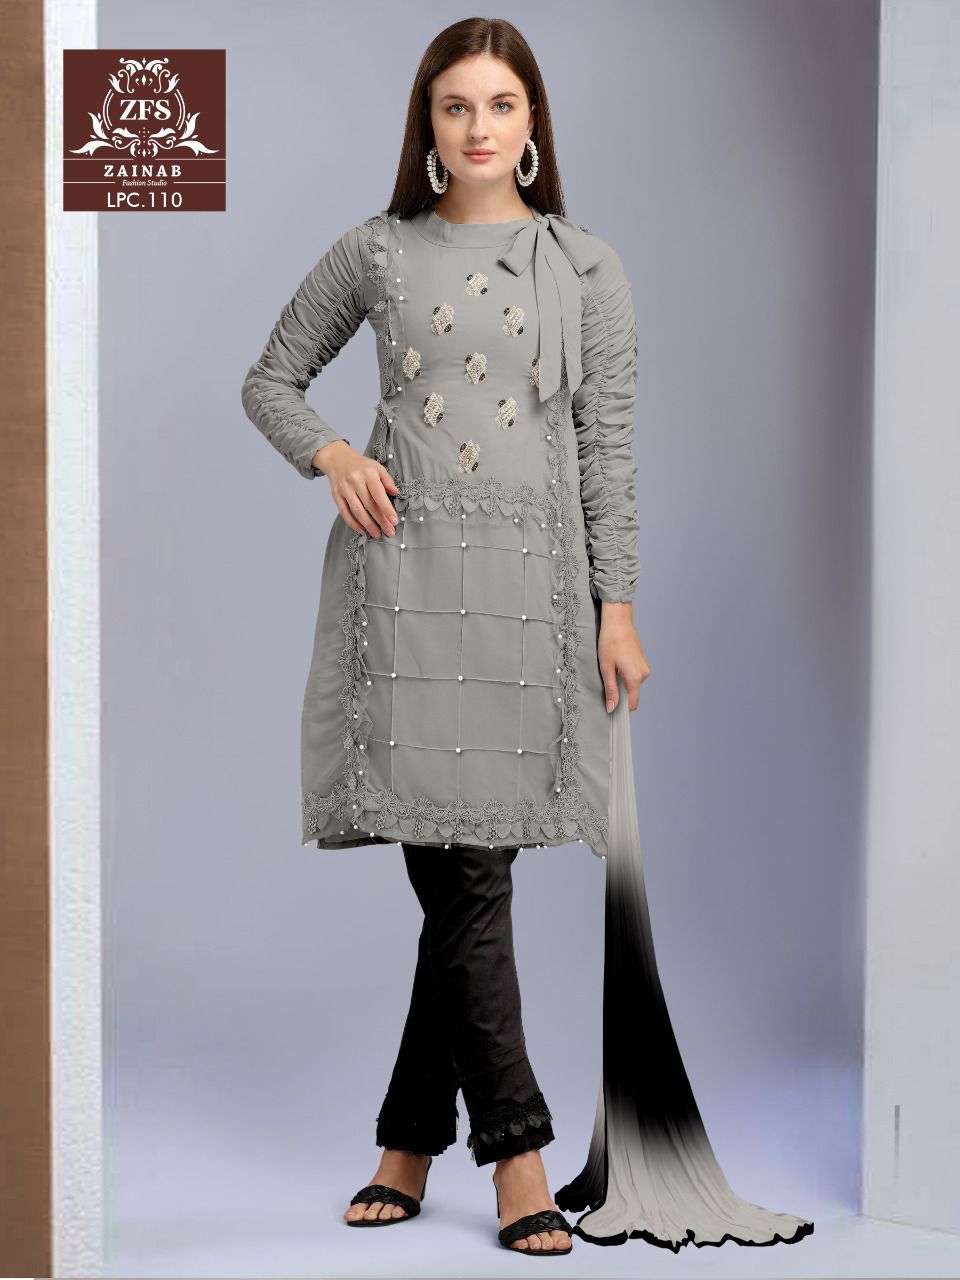 zainab fashion studio lpc-110 readymade designer pakistani suits catalogue new design (